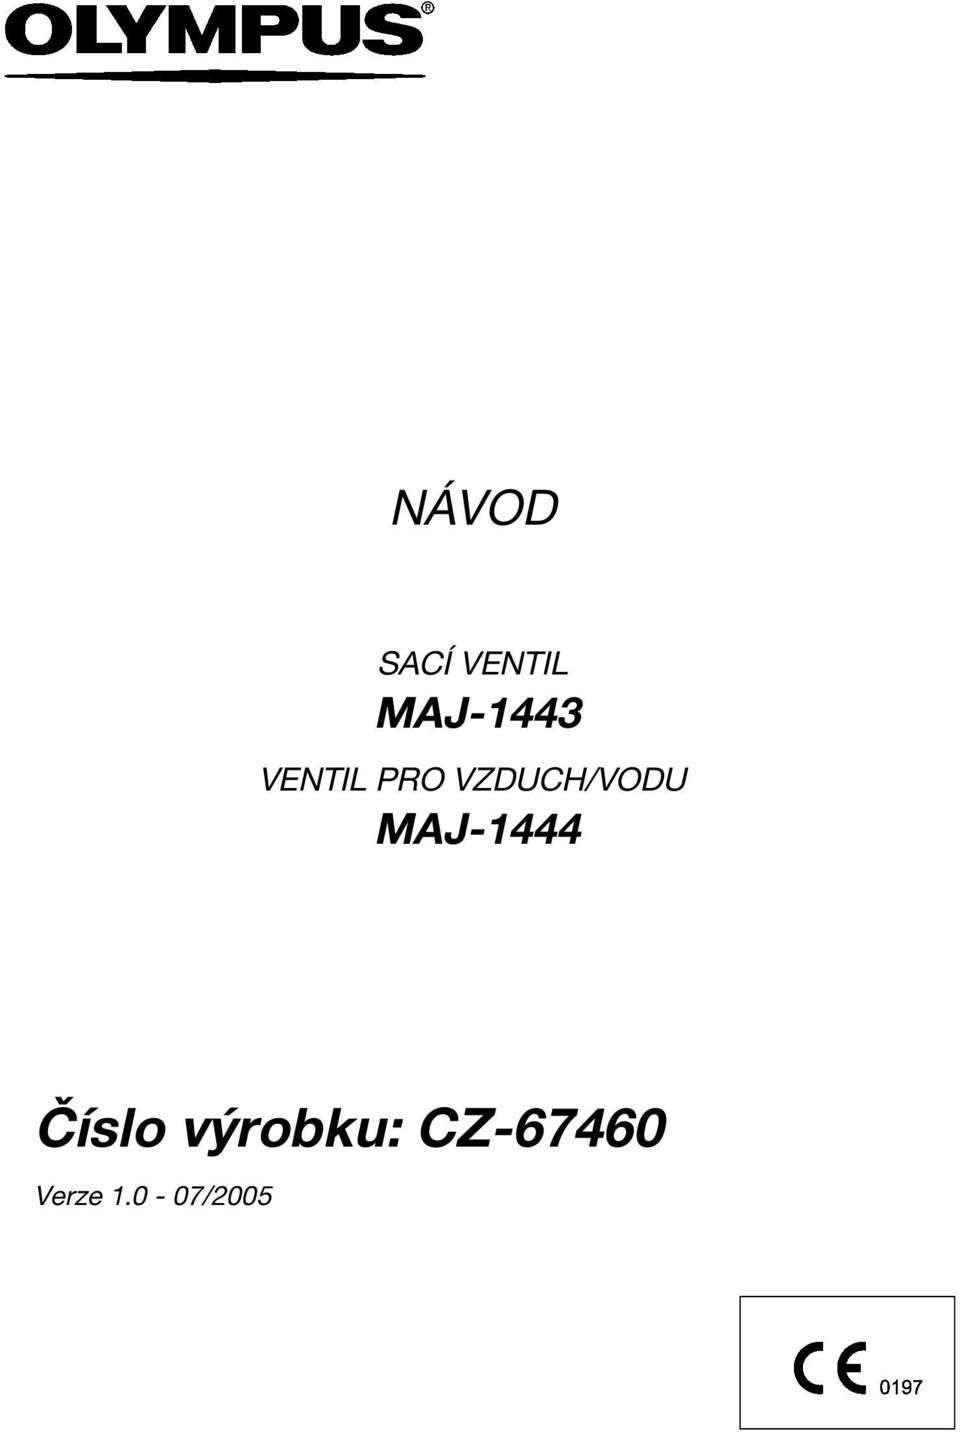 VZDUCH/VODU MAJ-1444